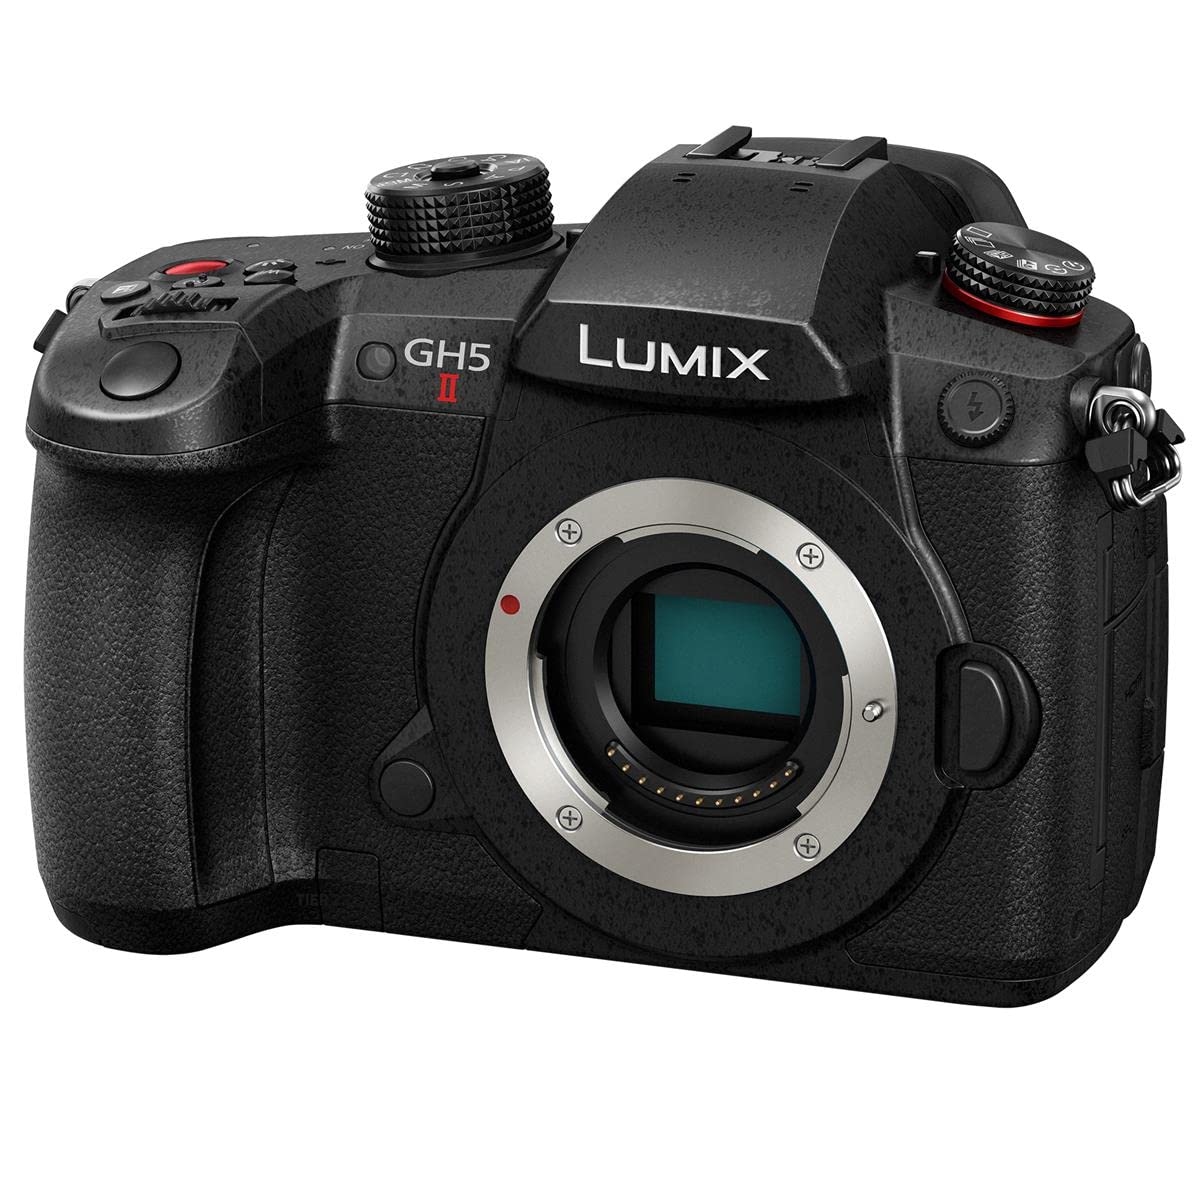 Panasonic Lumix GH5 II Mirrorless Digital Camera Body with Capture One Pro Photo Editing Software